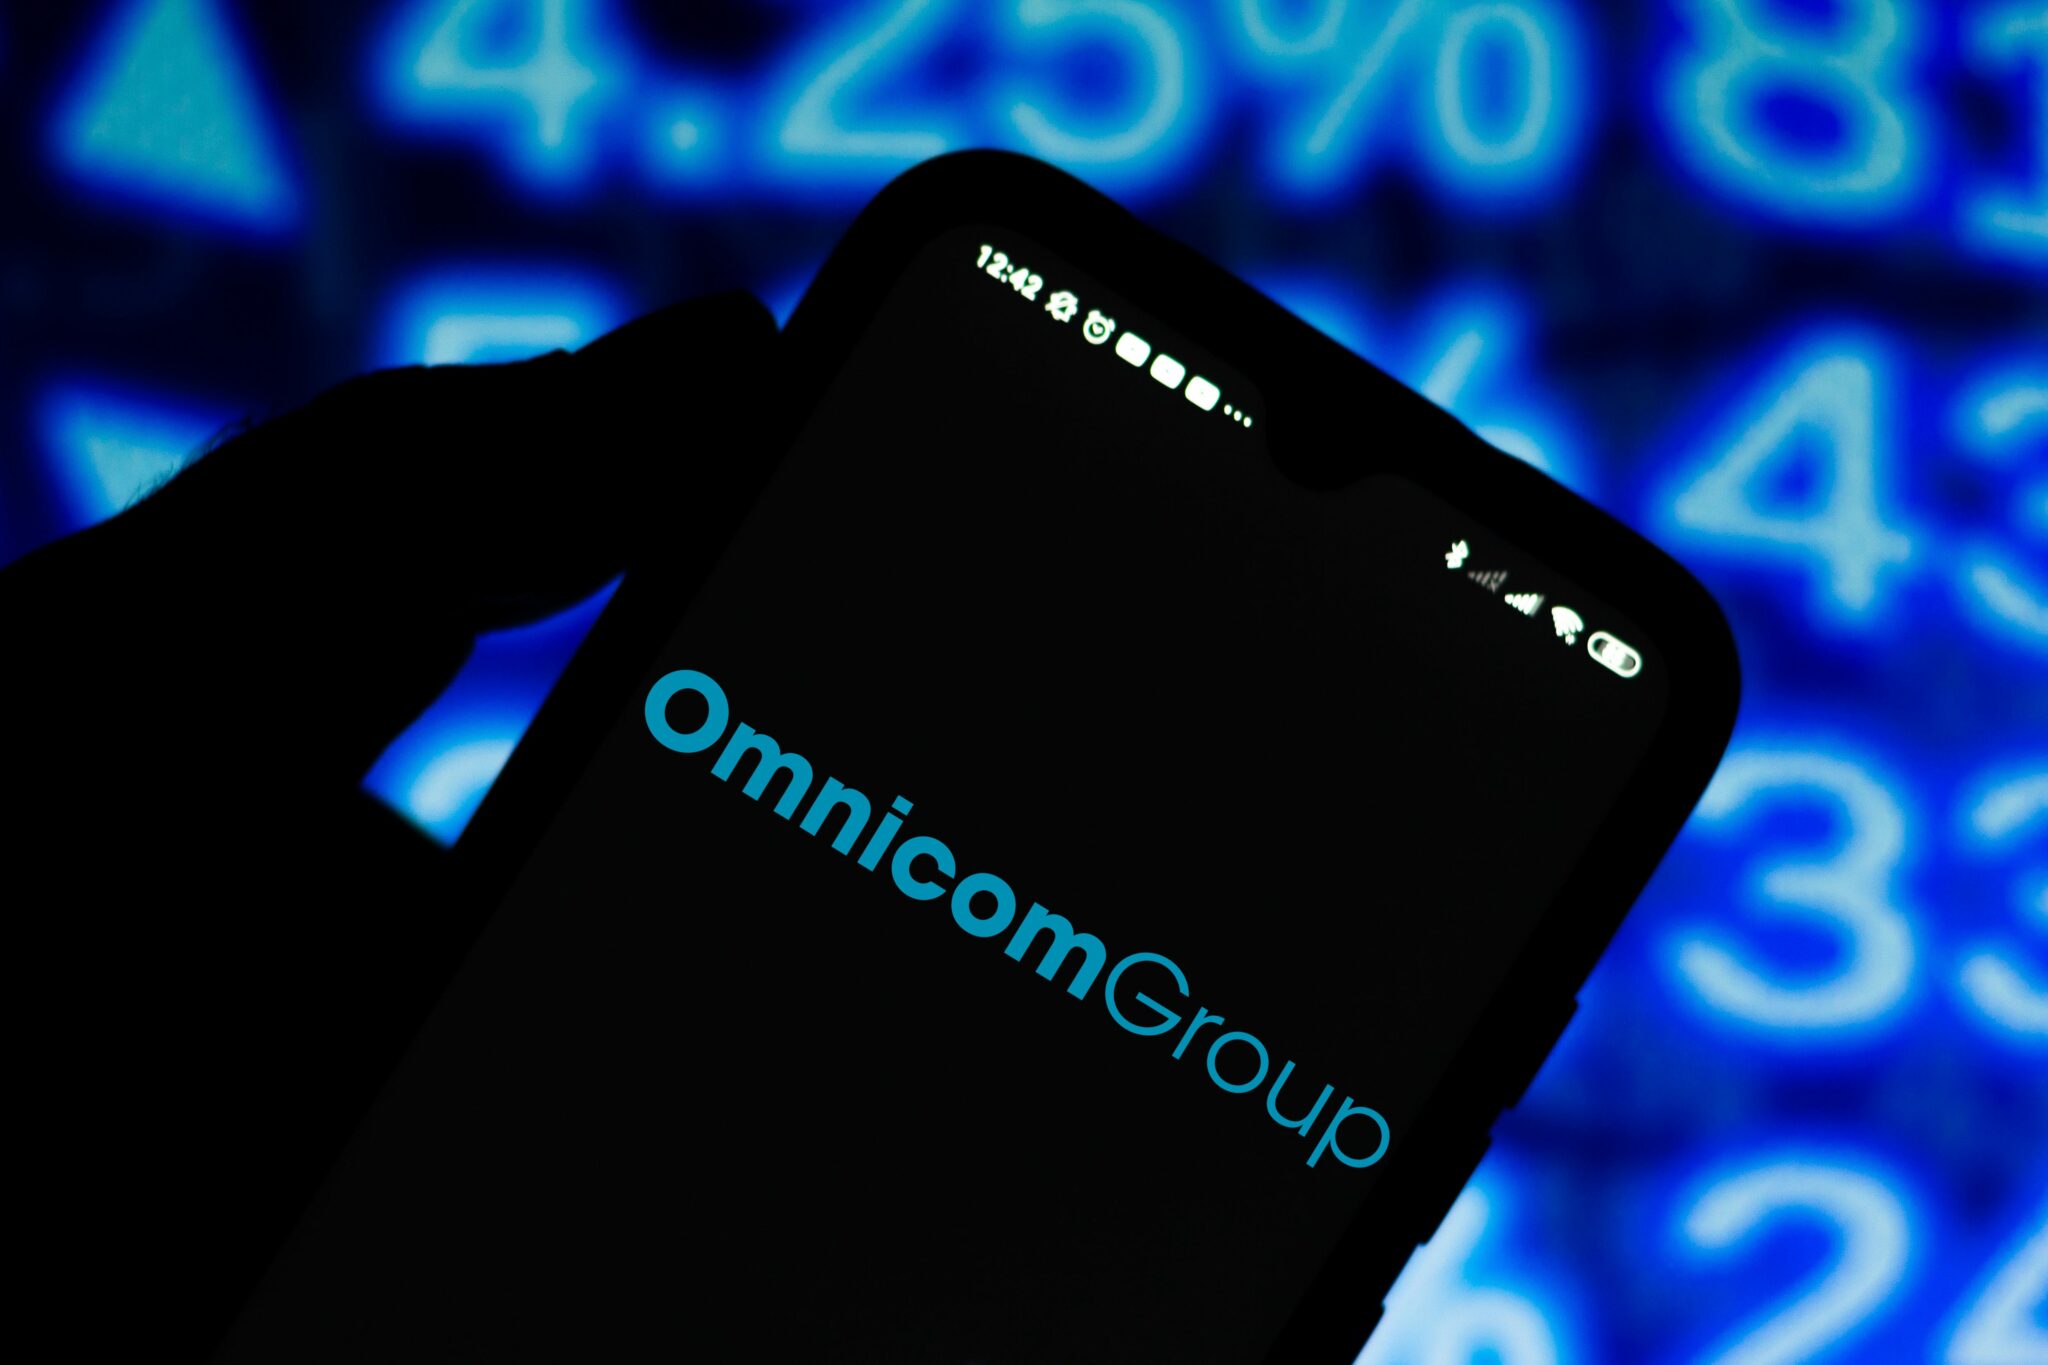 Omnicom Group – New York, $15 billion